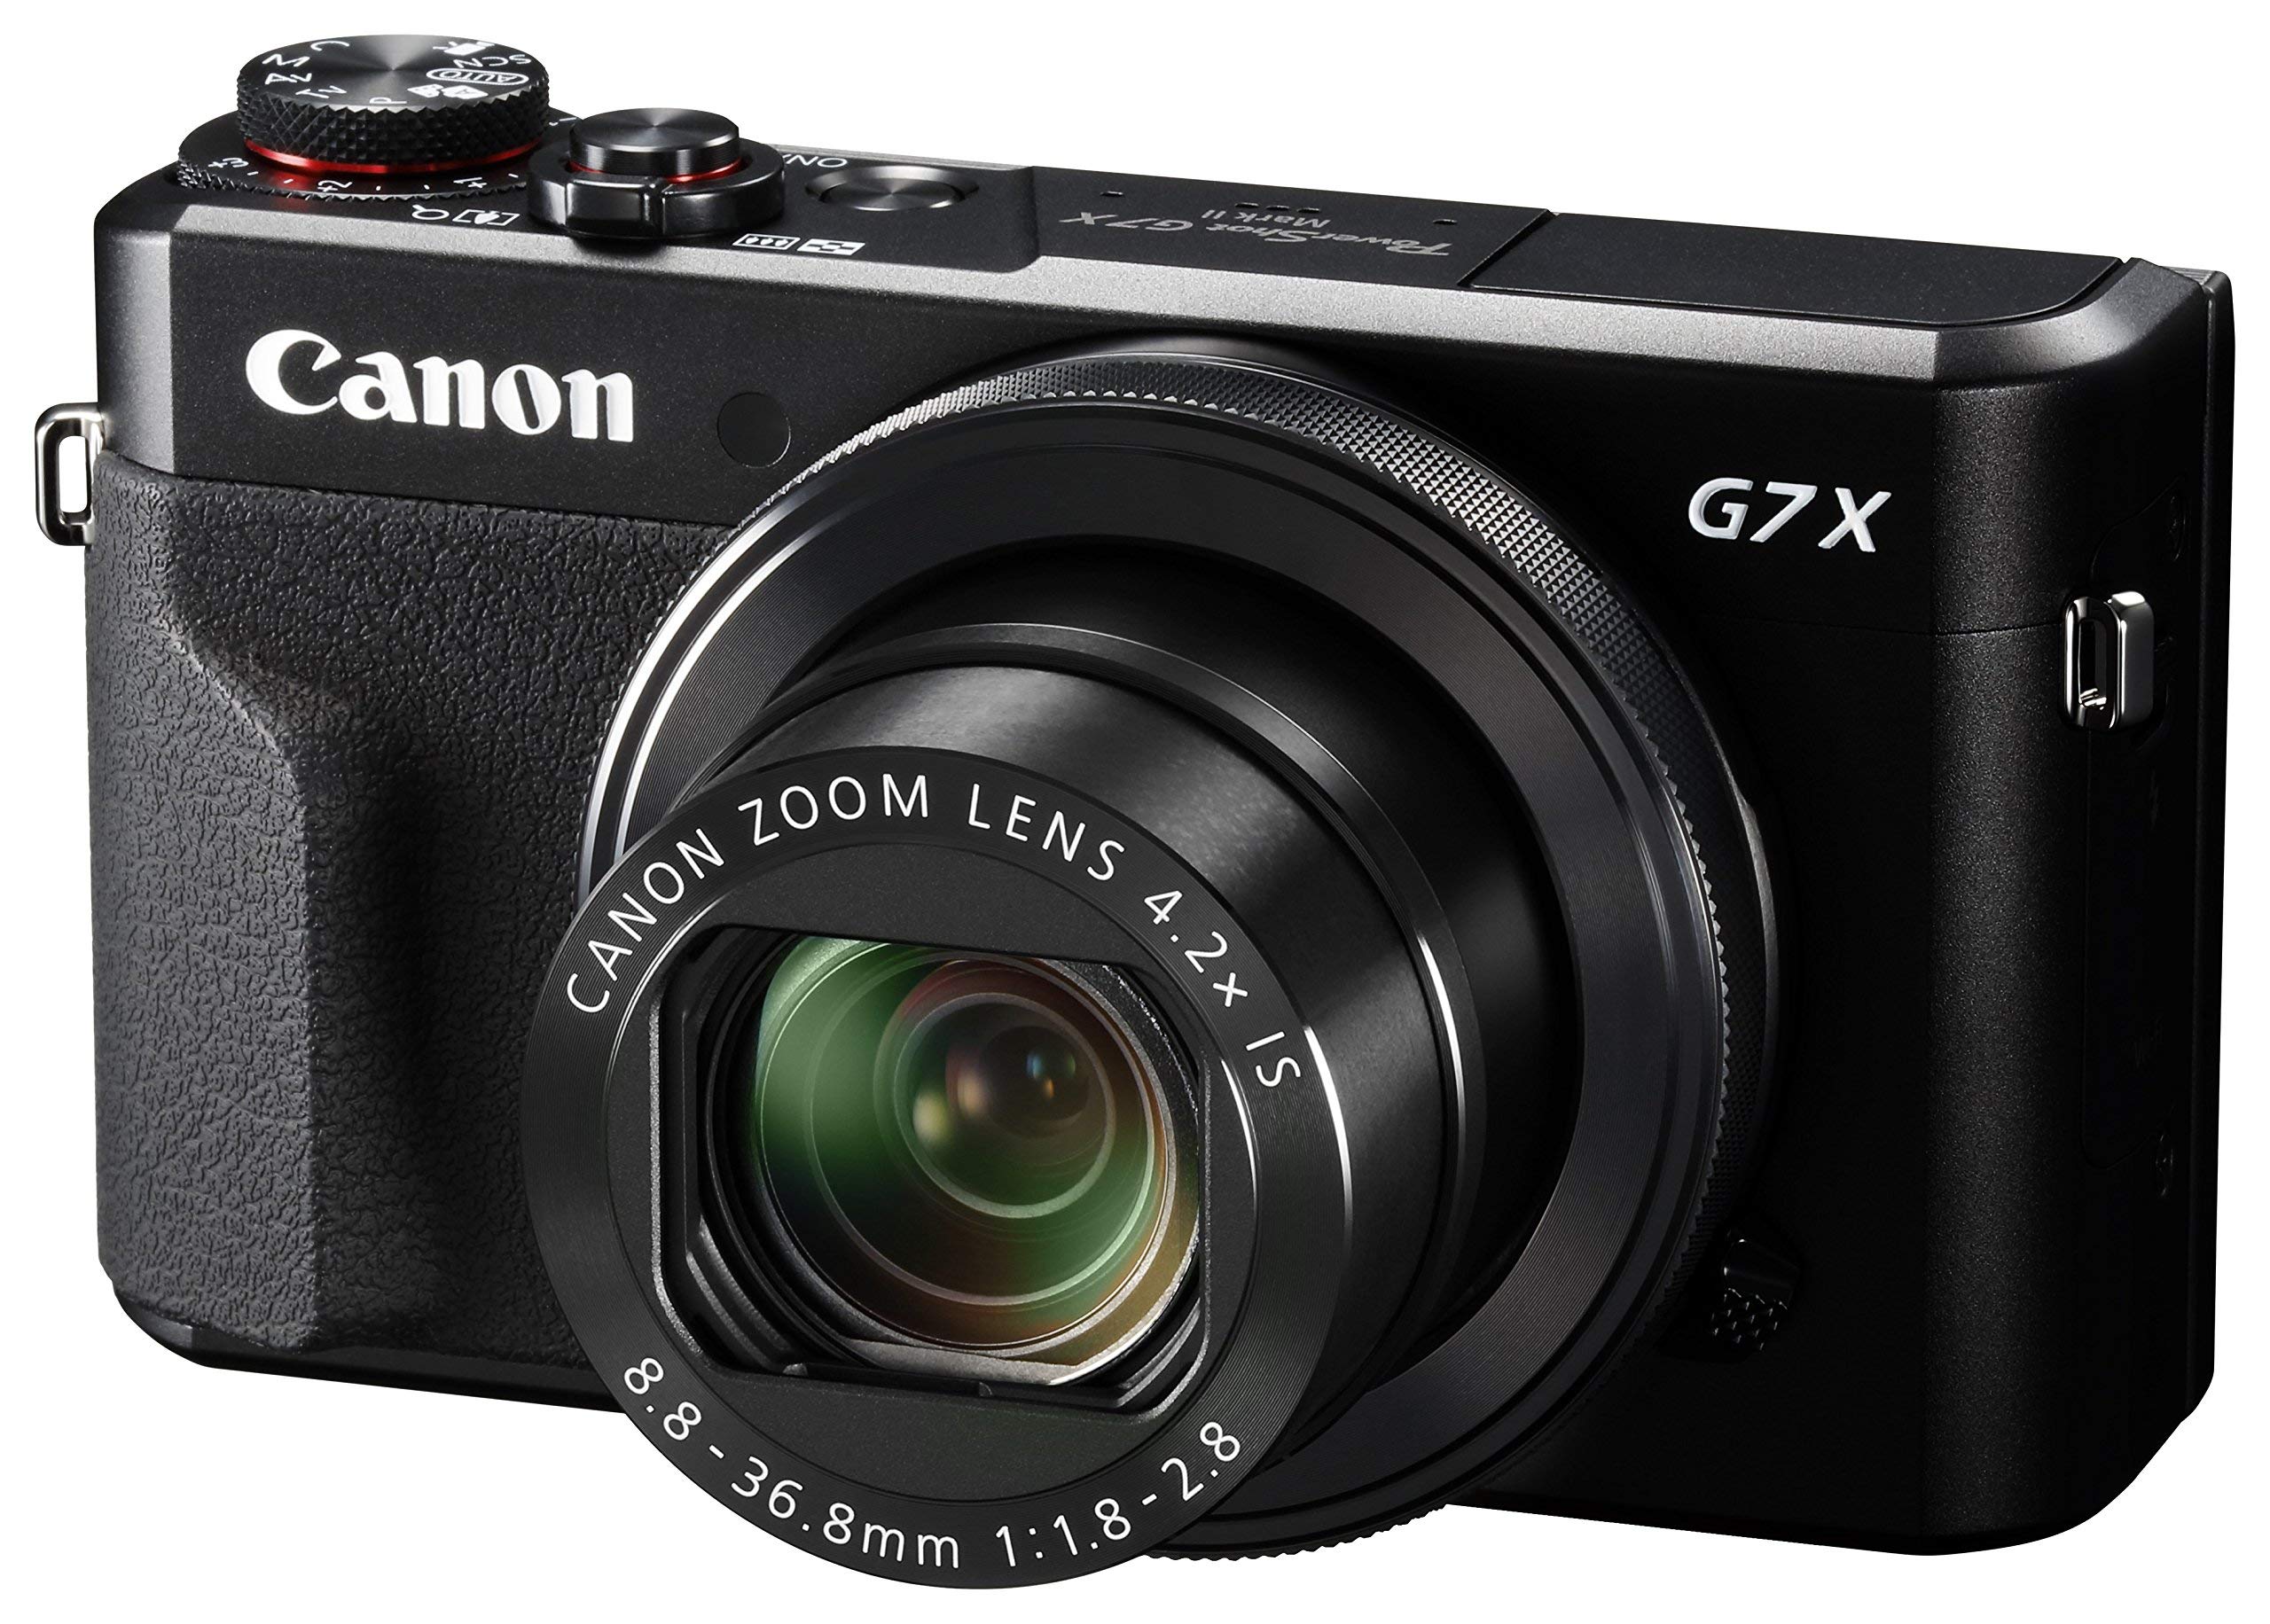 Canon PowerShot Digital Camera [G7 X Mark II] with Wi-Fi & NFC, LCD Screen, and 1-inch Sensor - Black - International Model